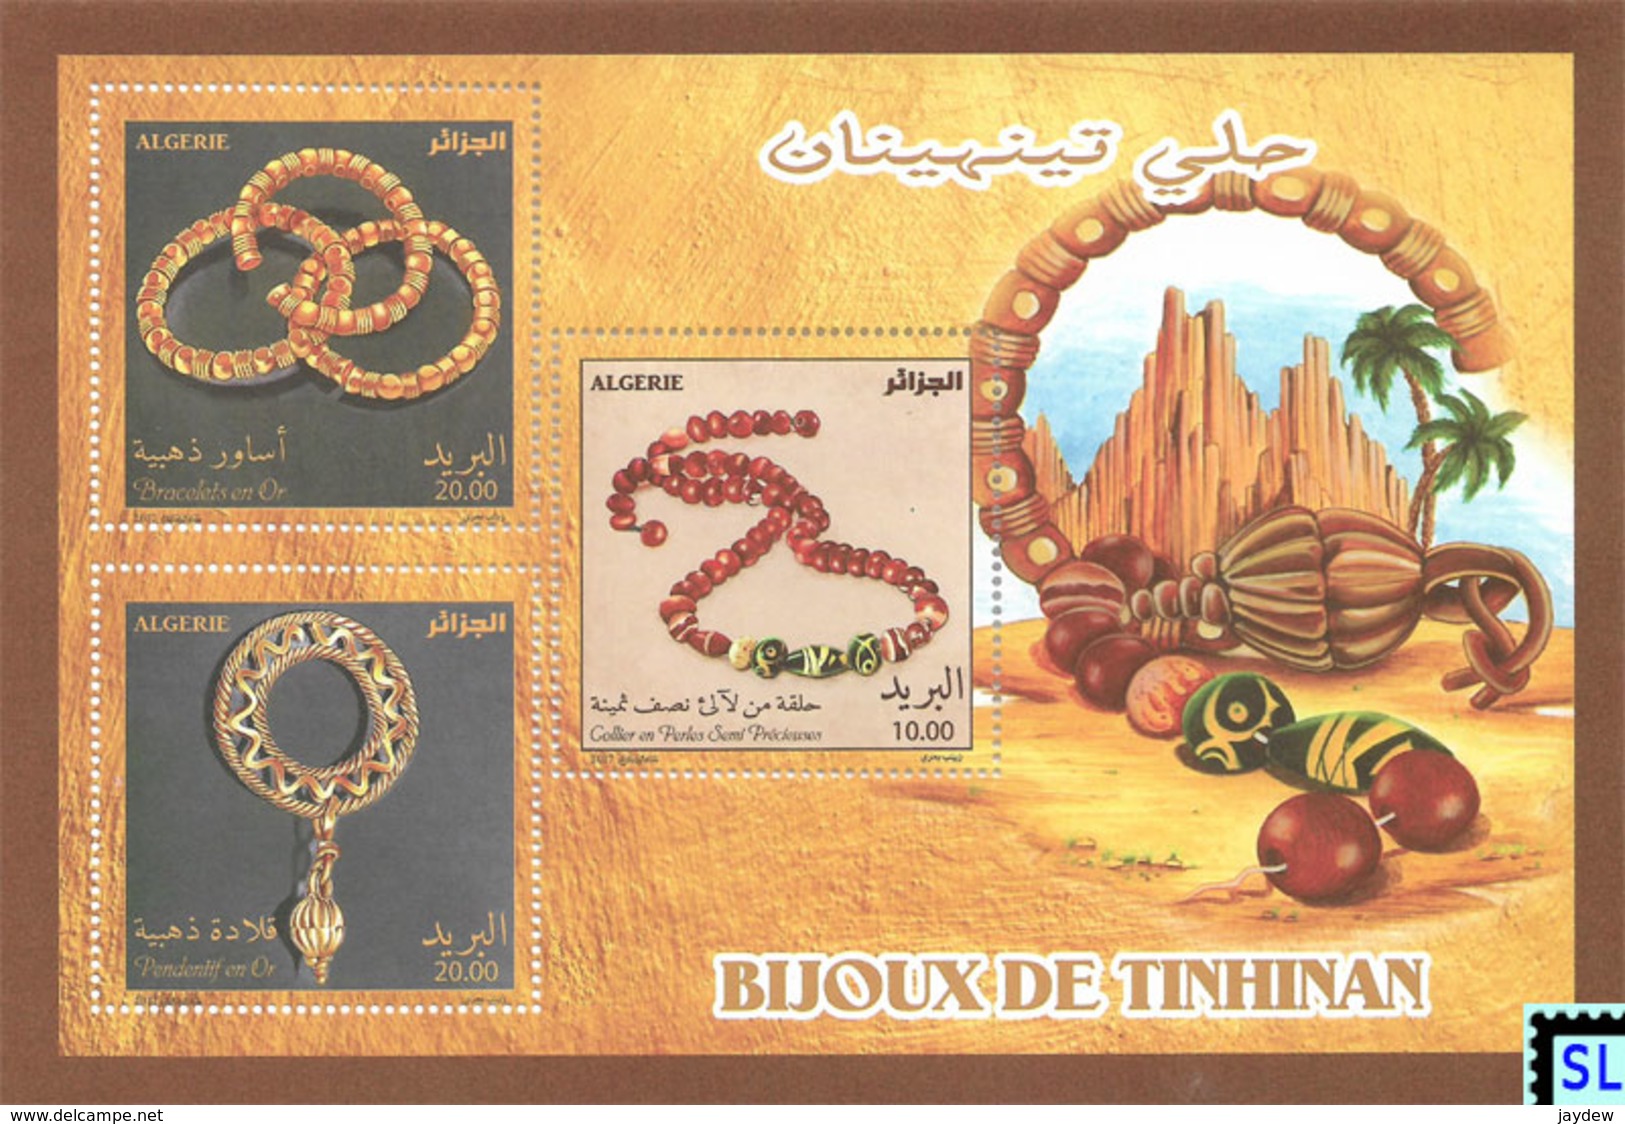 Algeria Stamps 2017, Archaeology, Tinhinan Jewelry, MS - Algeria (1962-...)